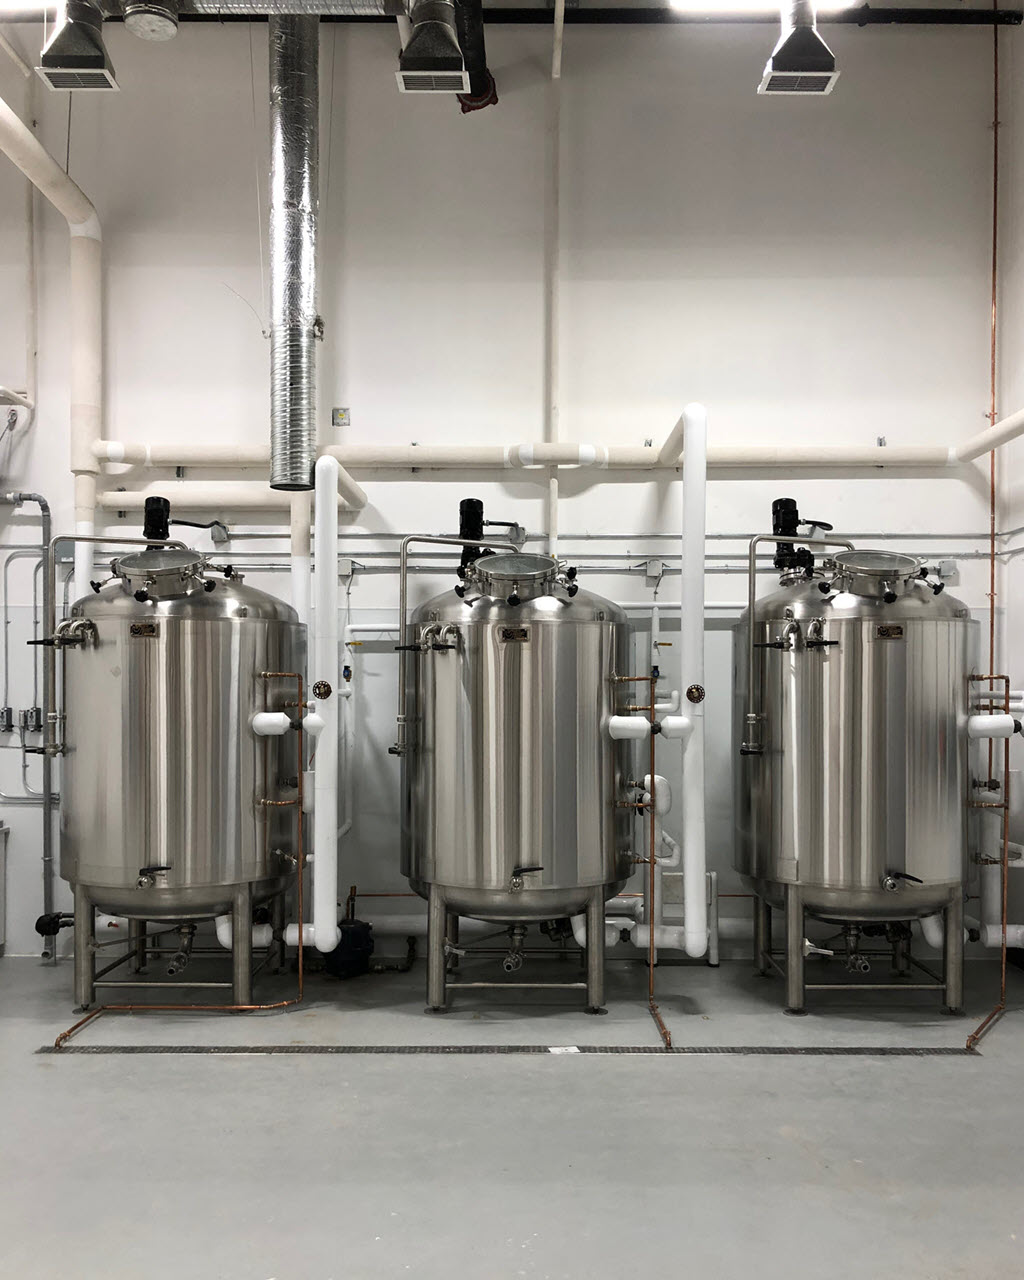 Catoctin Creek Distilling - $1 Million Expansion Plans - Adding 6 New Dome Top Fermenter